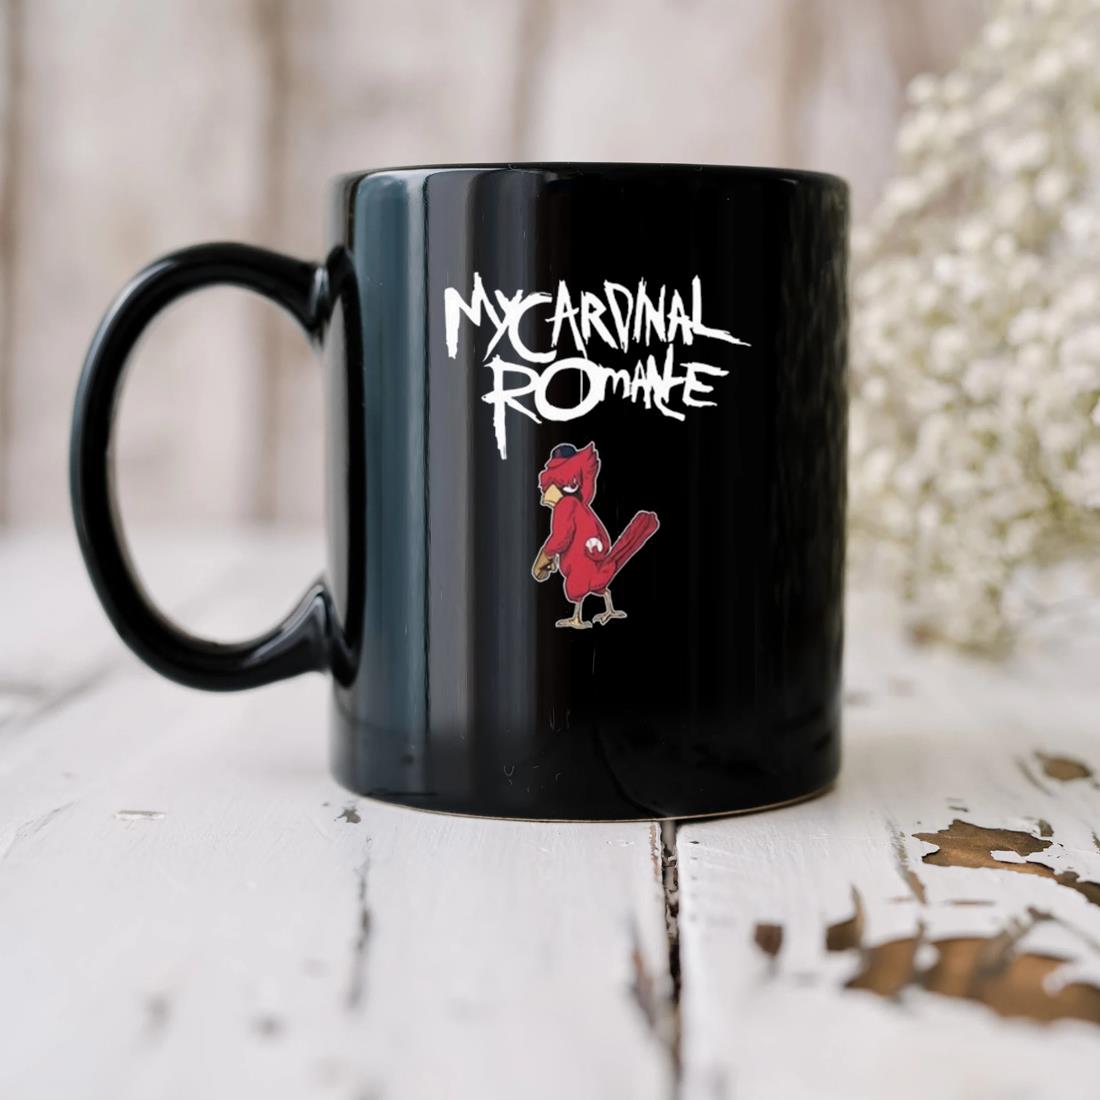 Mycardinal Romance Mug